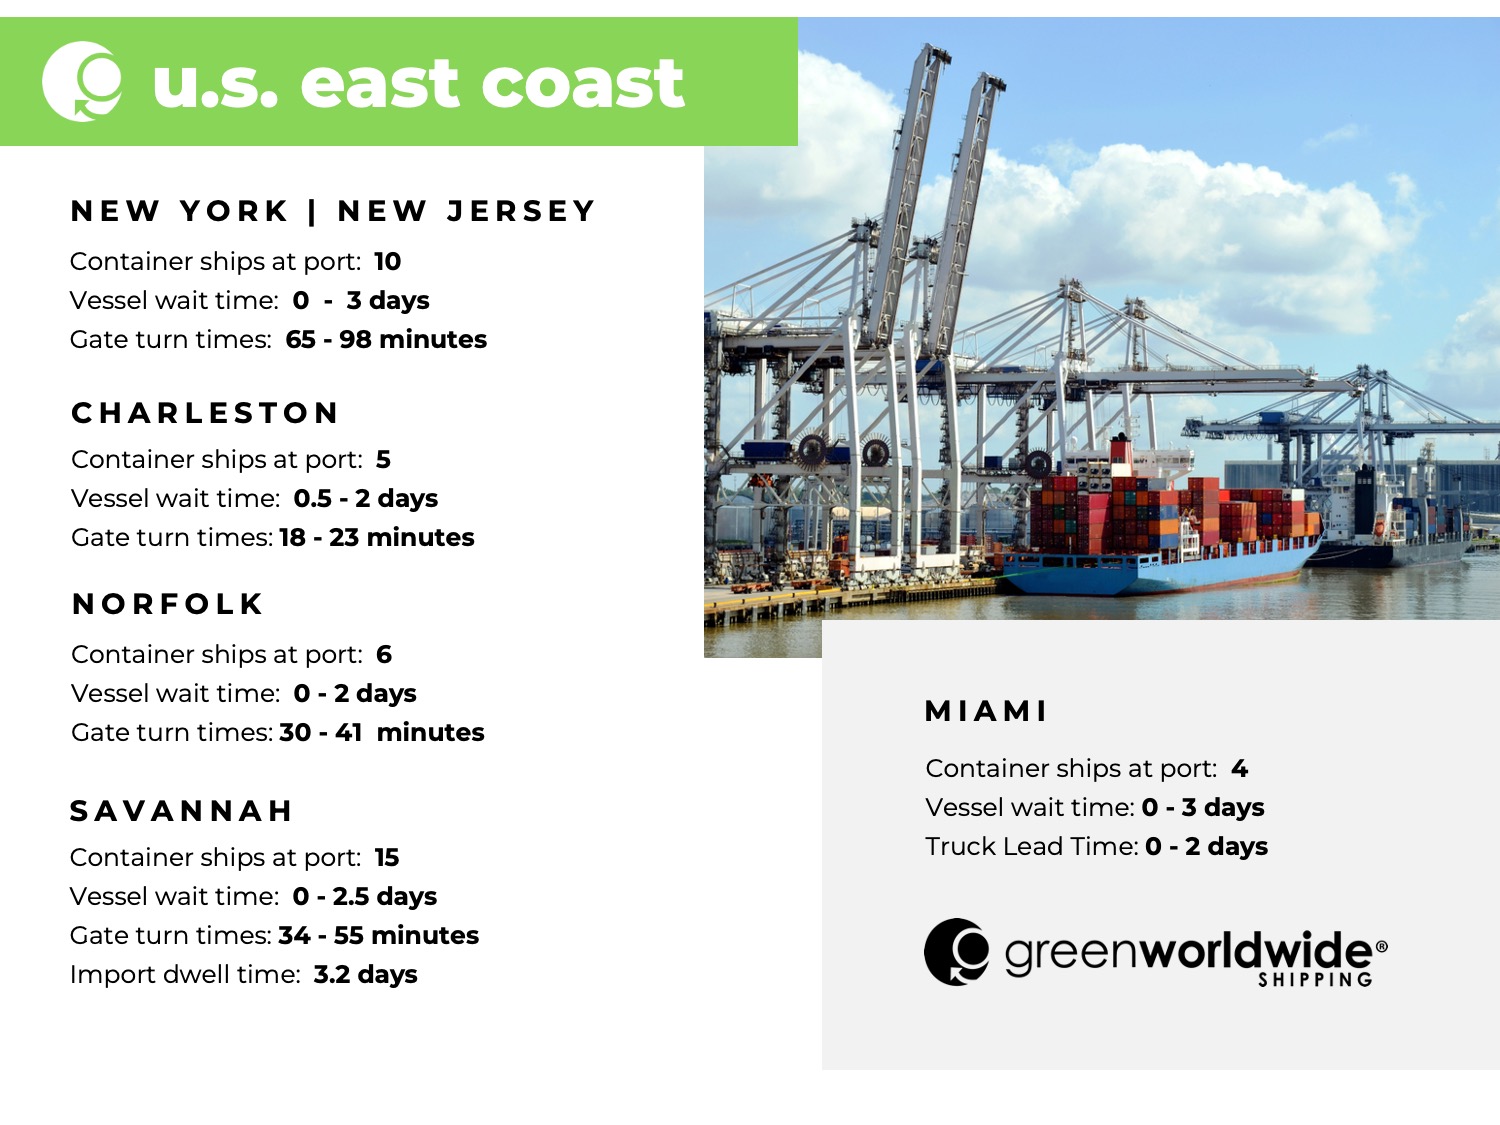 freight market update, week 17, green worldwide shipping, u.s. east coast port congestion